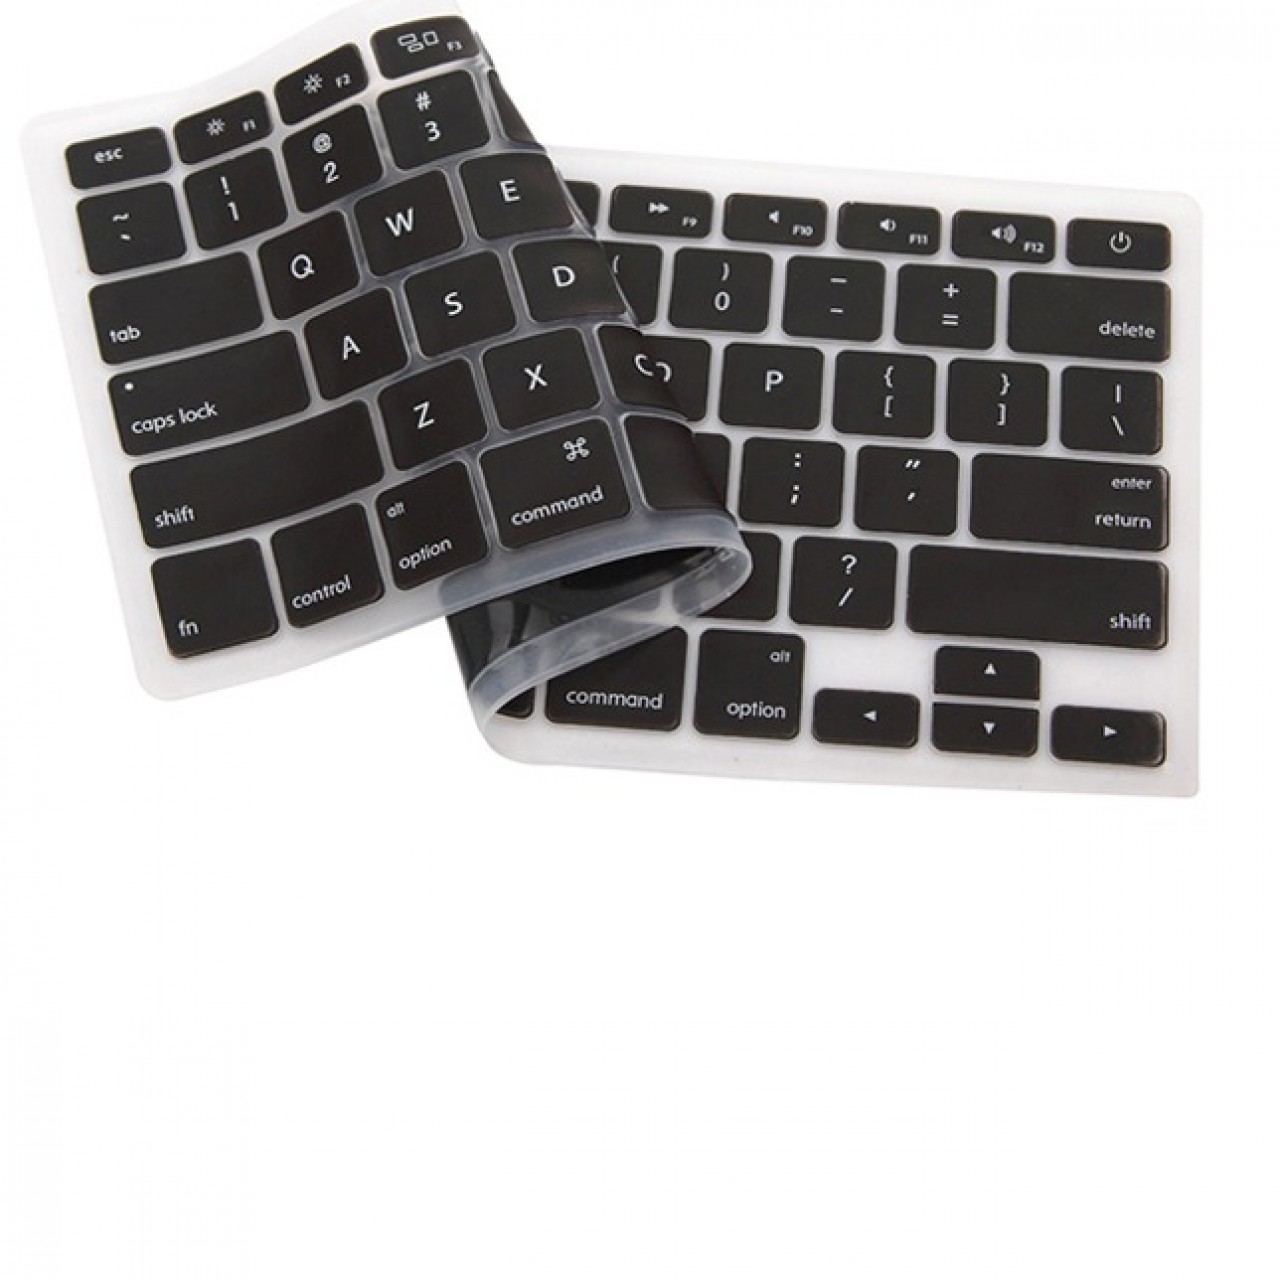 Macbook Pro 15 Inch Color Key Skin - Black